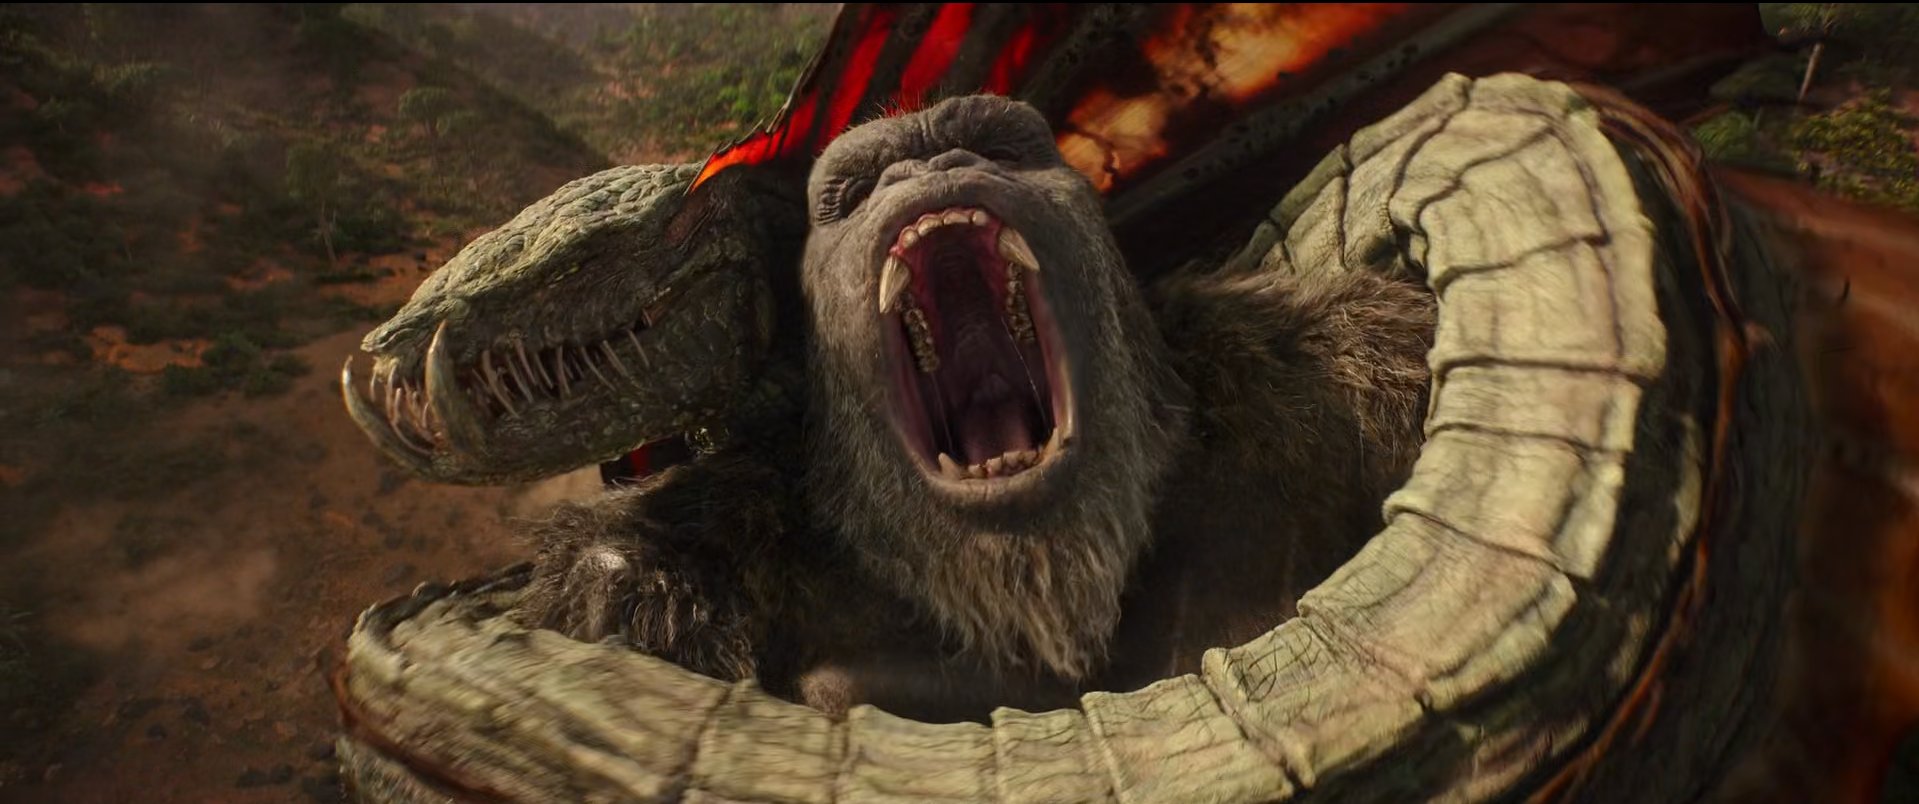 Godzilla vs. Kong (2021) Movie images